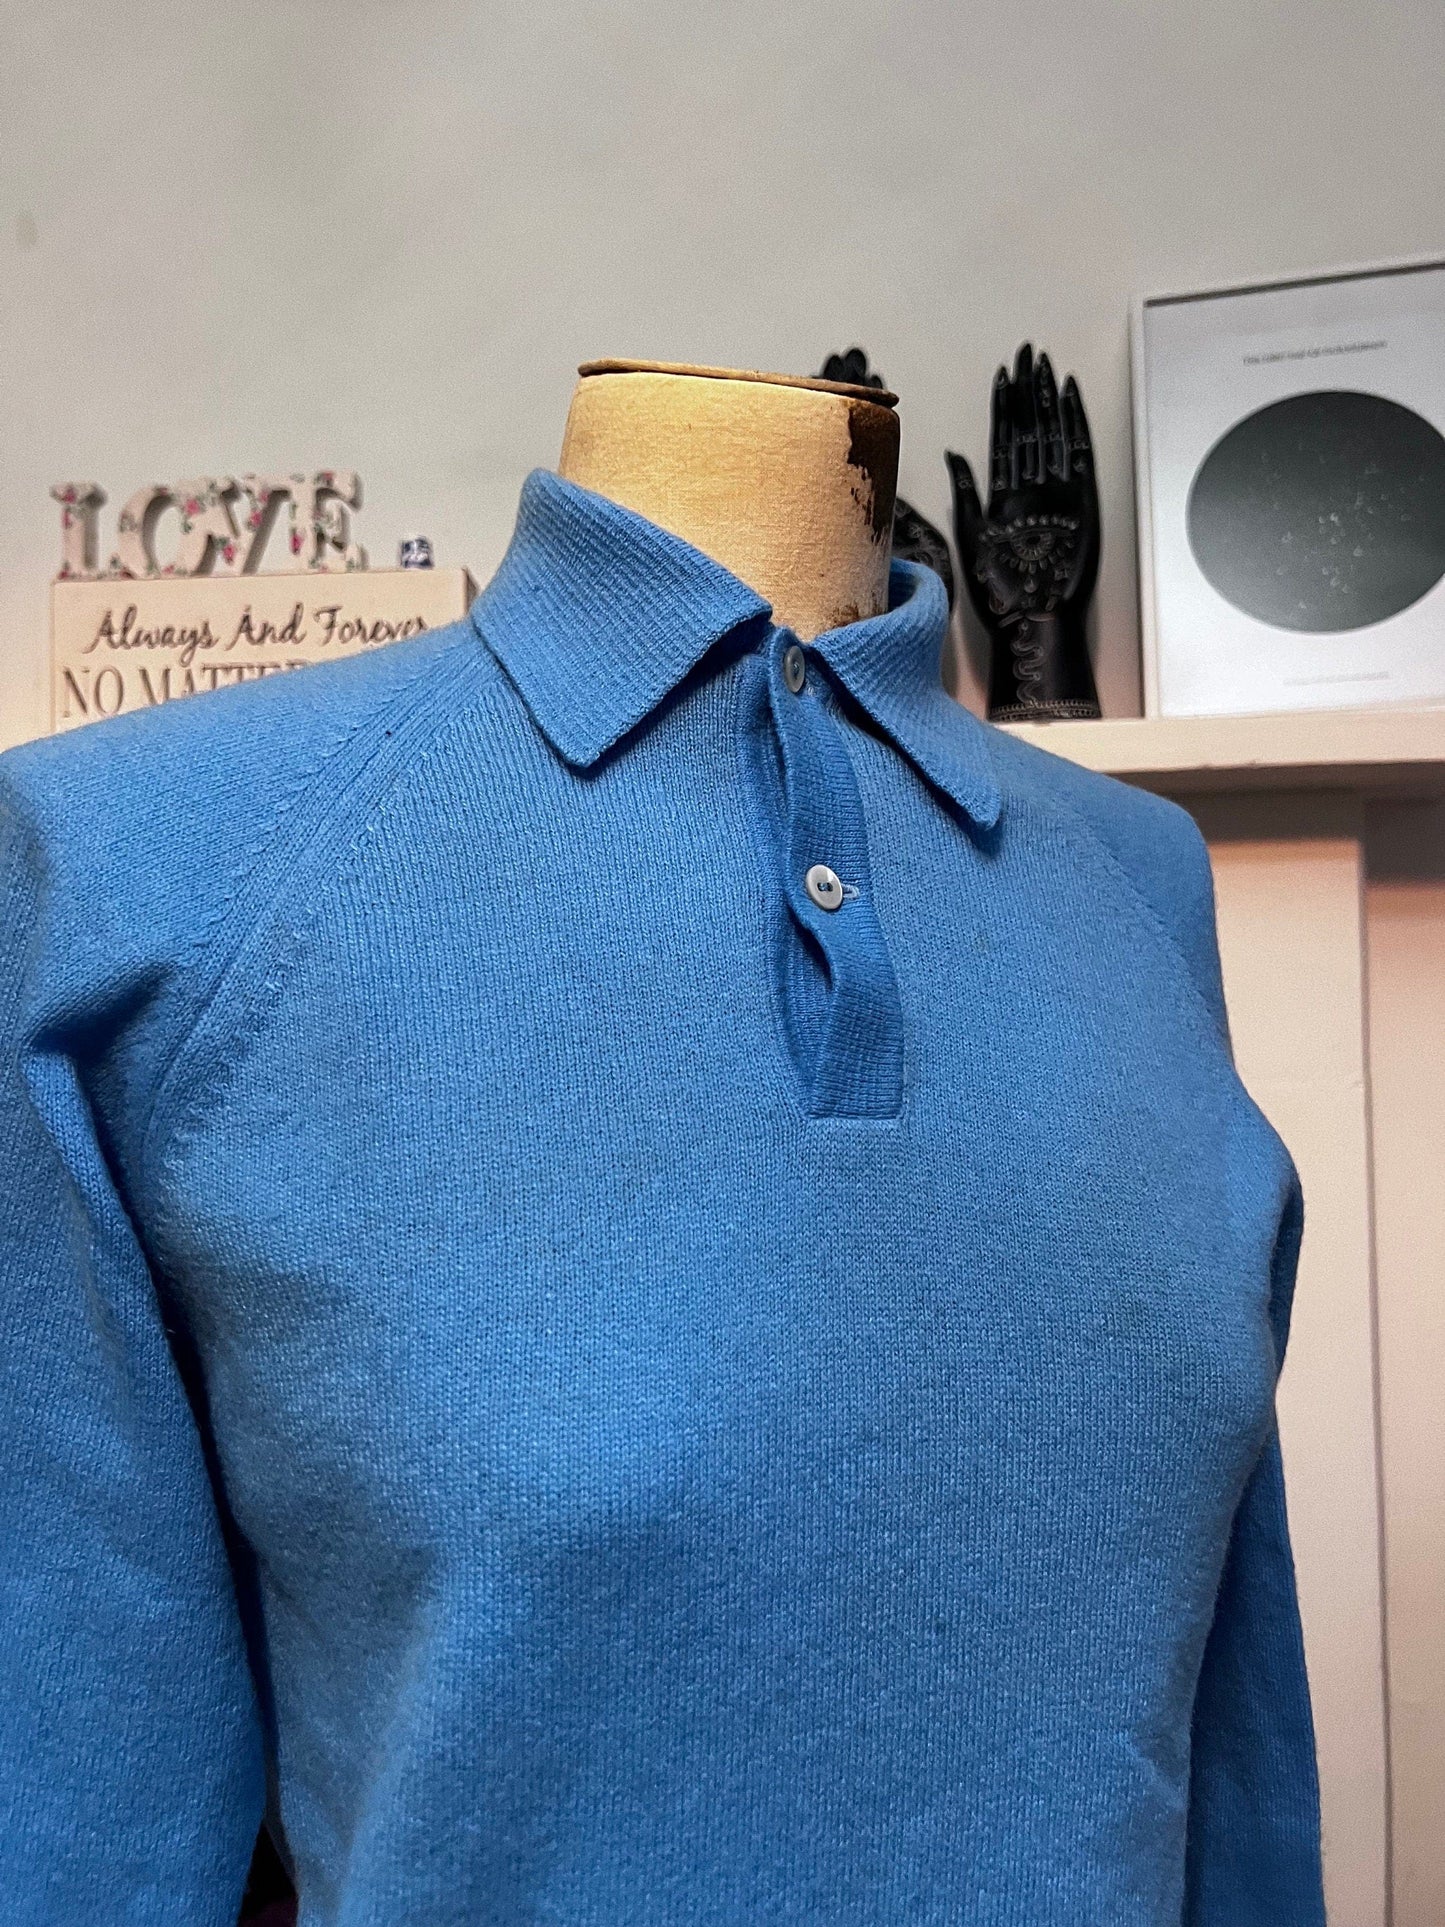 Vintage blue jumper lambswool jumper powder blue jumper, blue vintage knitwear, vintage pullover, vintage jumper, 1950s, vintage knitwear